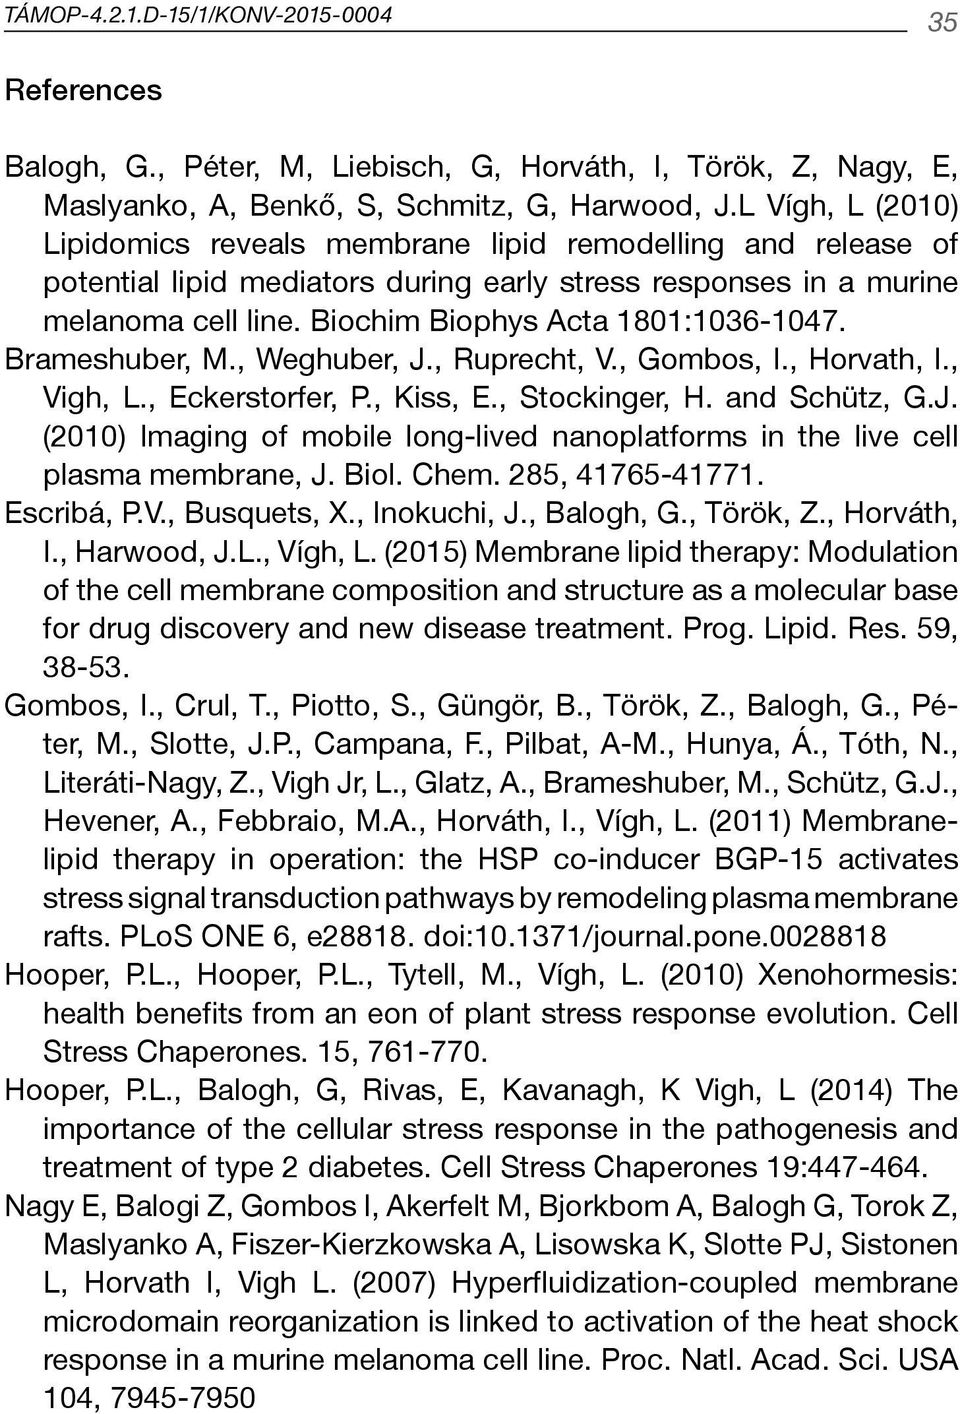 Biochim Biophys Acta 1801:1036-1047. Brameshuber, M., Weghuber, J., Ruprecht, V., Gombos, I., Horvath, I., Vigh, L., Eckerstorfer, P., Kiss, E., Stockinger, H. and Schütz, G.J. (2010) Imaging of mobile long-lived nanoplatforms in the live cell plasma membrane, J.